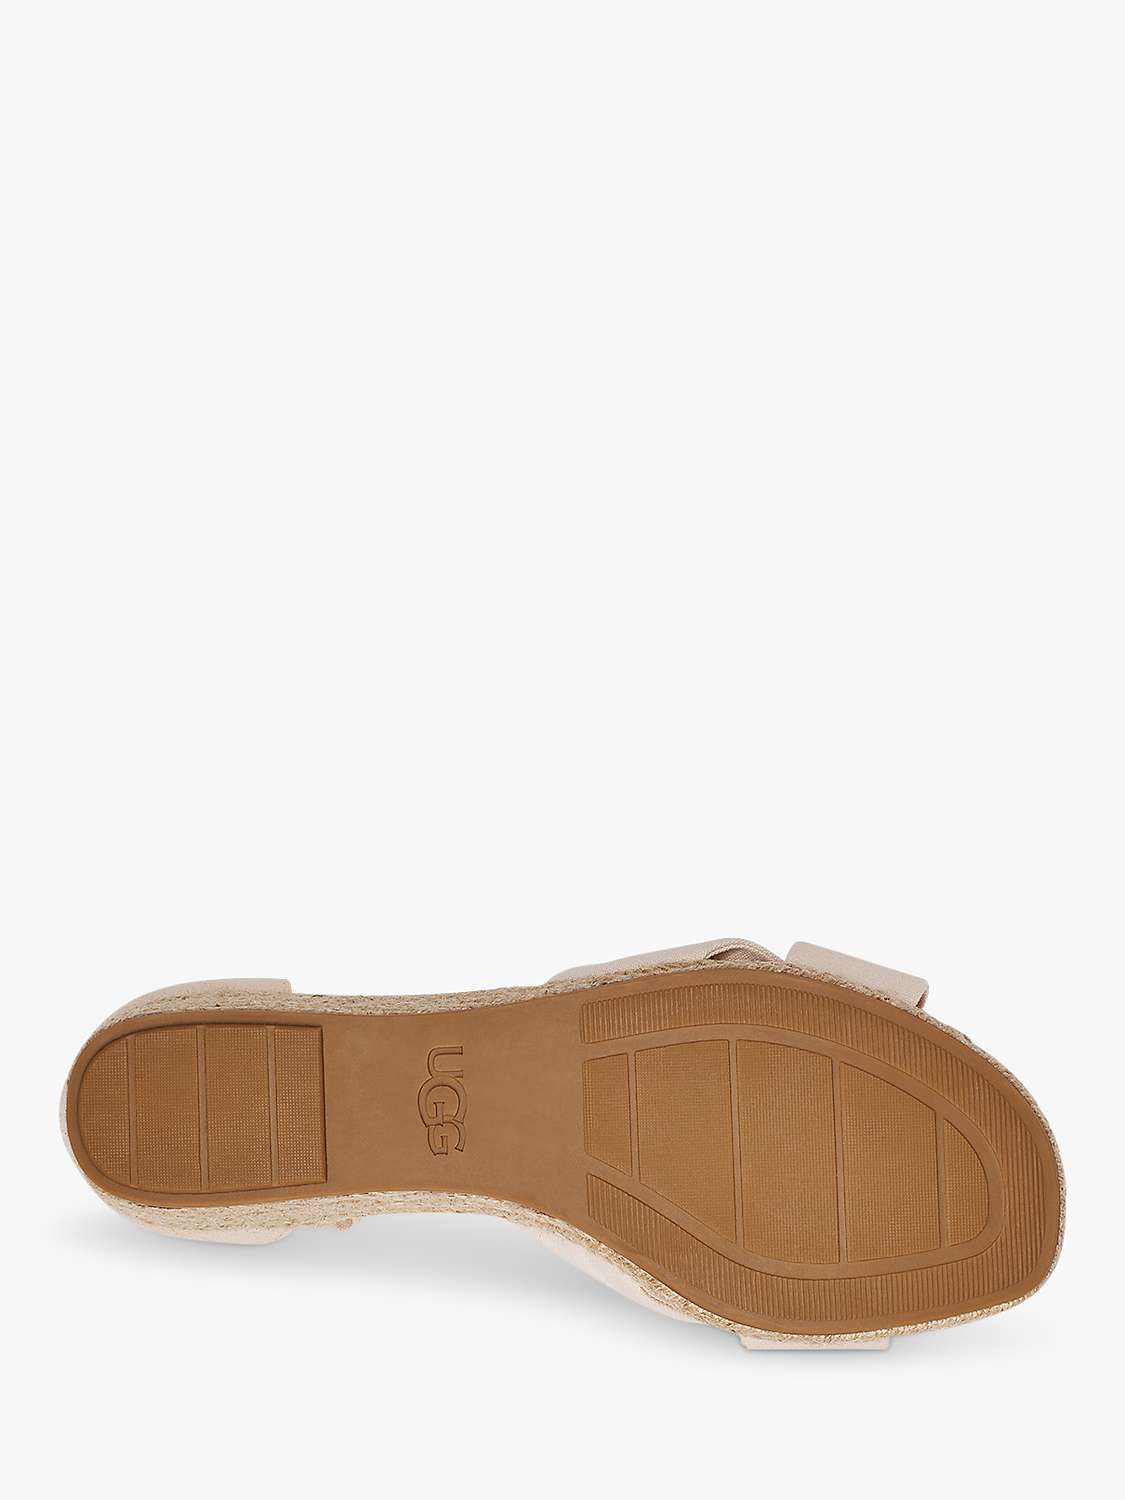 Buy UGG Yarrow Wedge Sandals Online at johnlewis.com